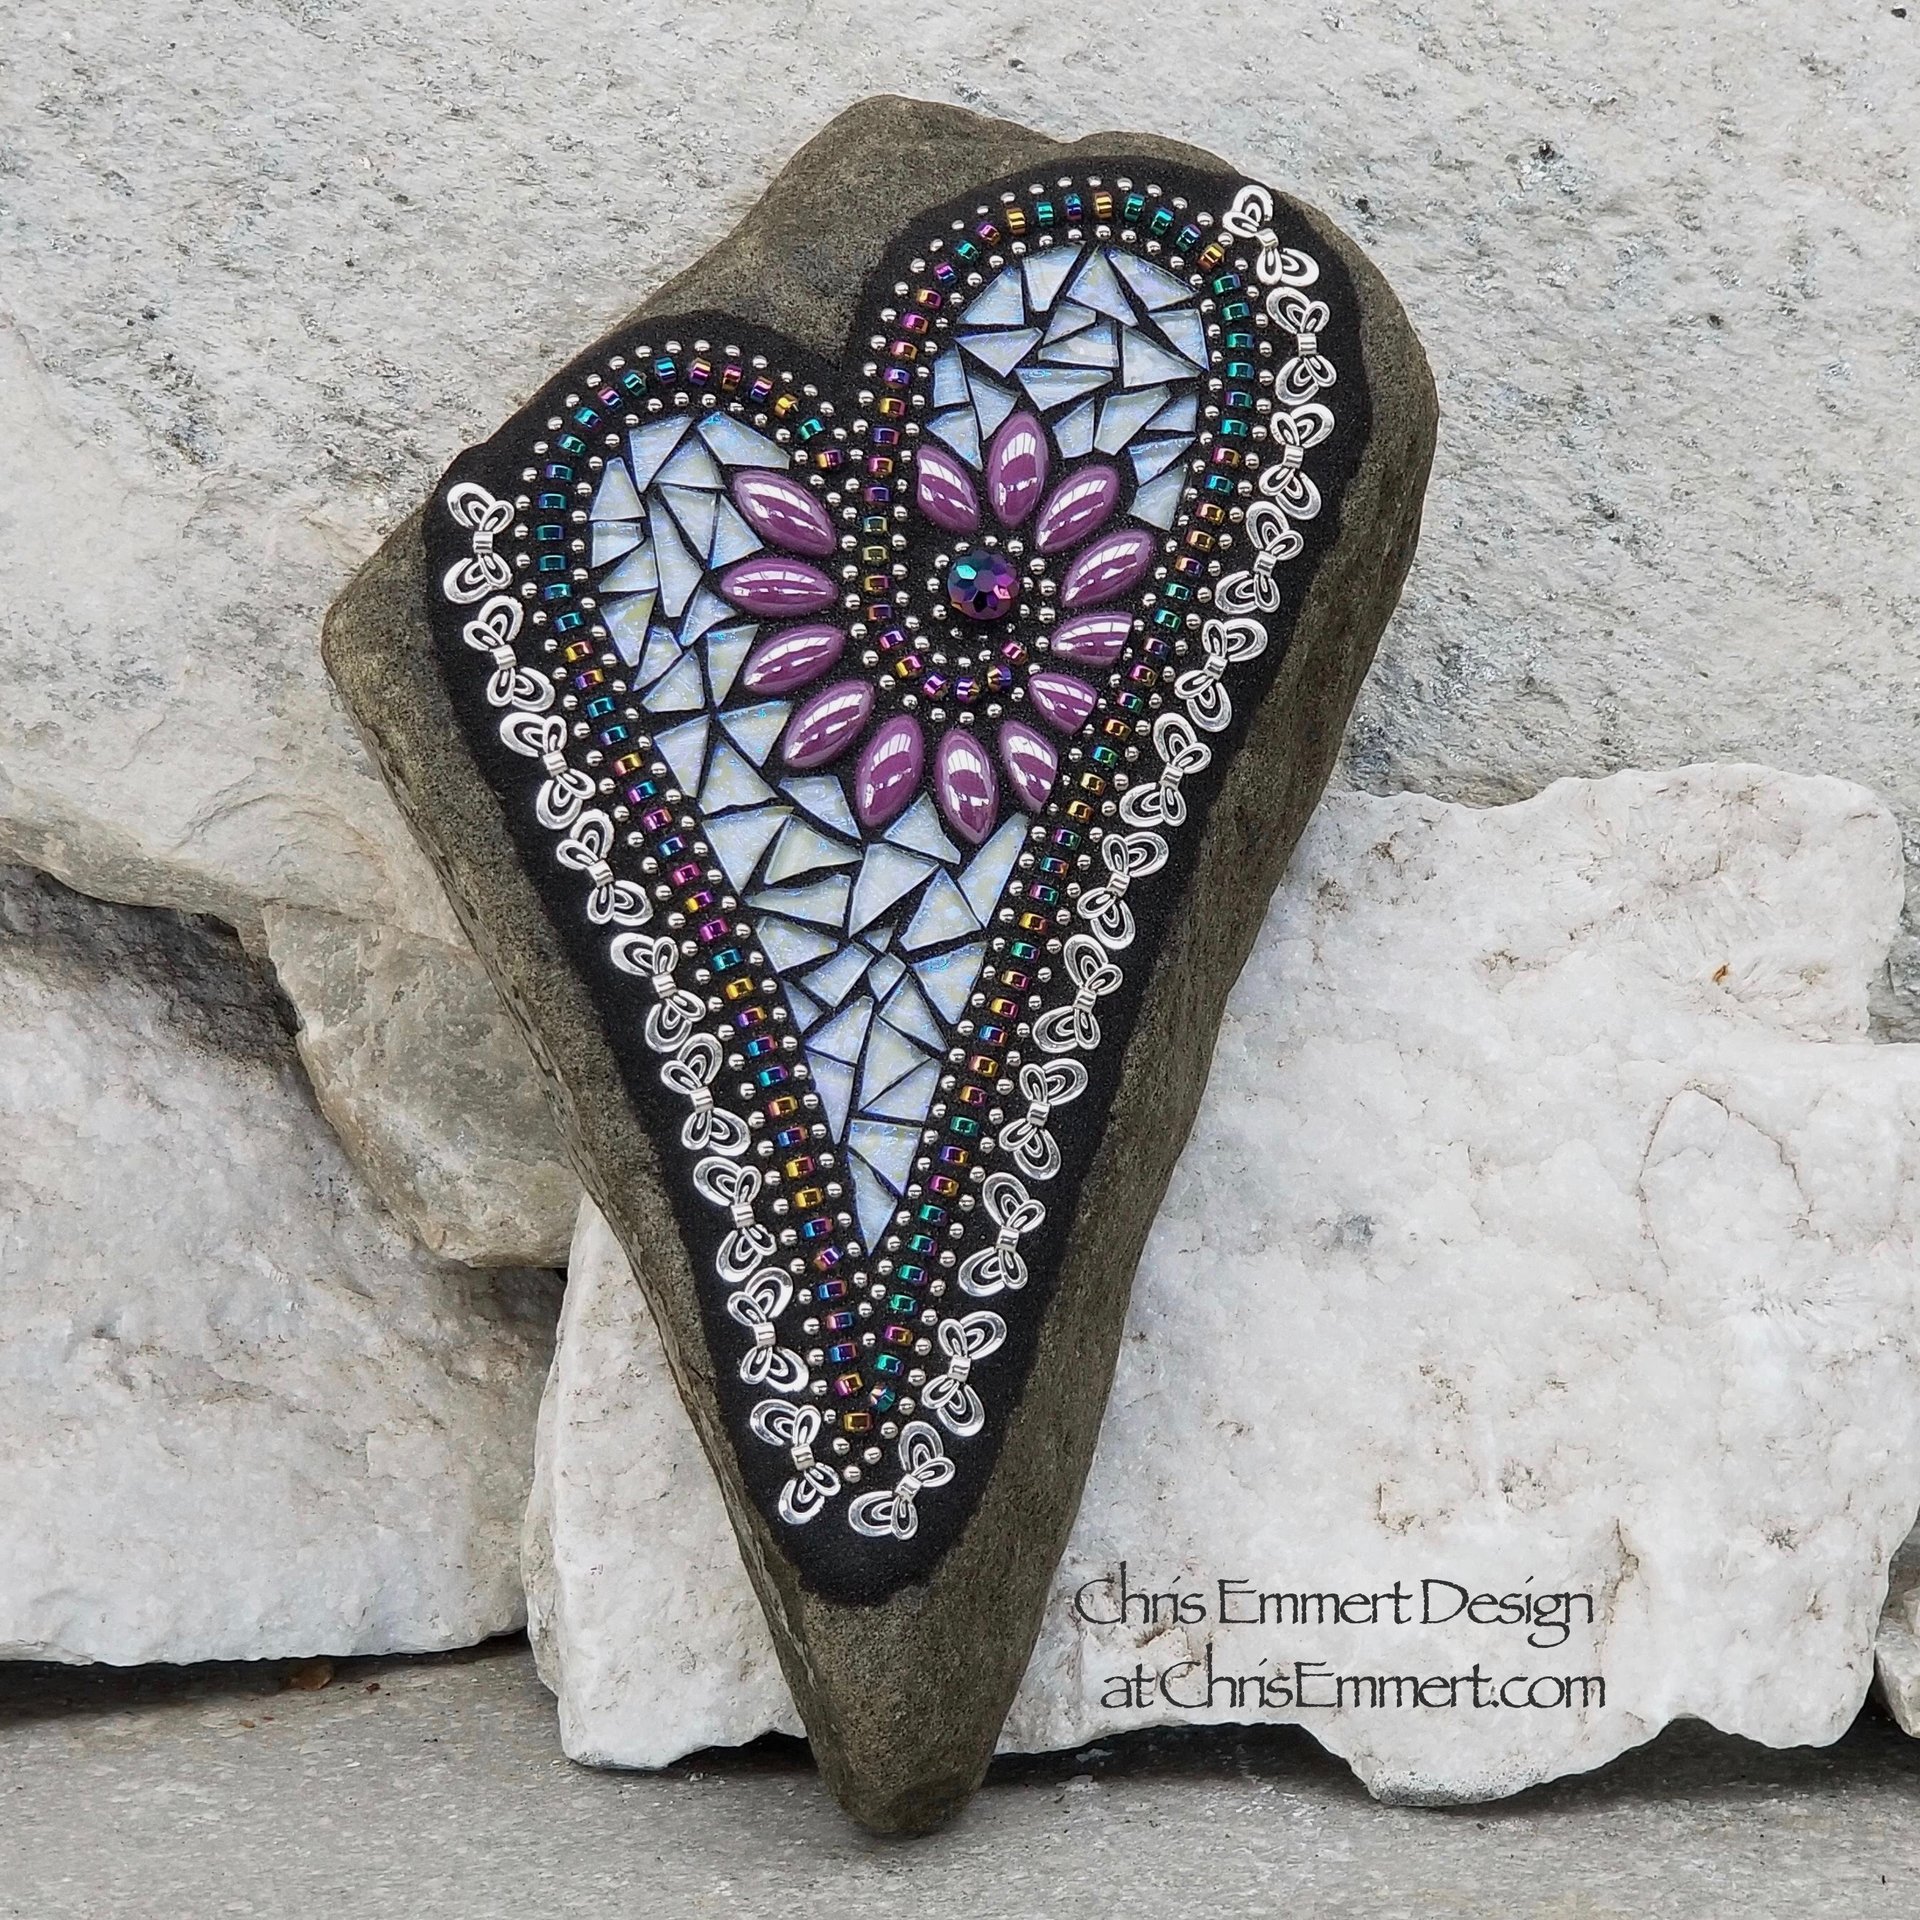 Mosaic heart garden Stone, purple flower and pewter butterflies